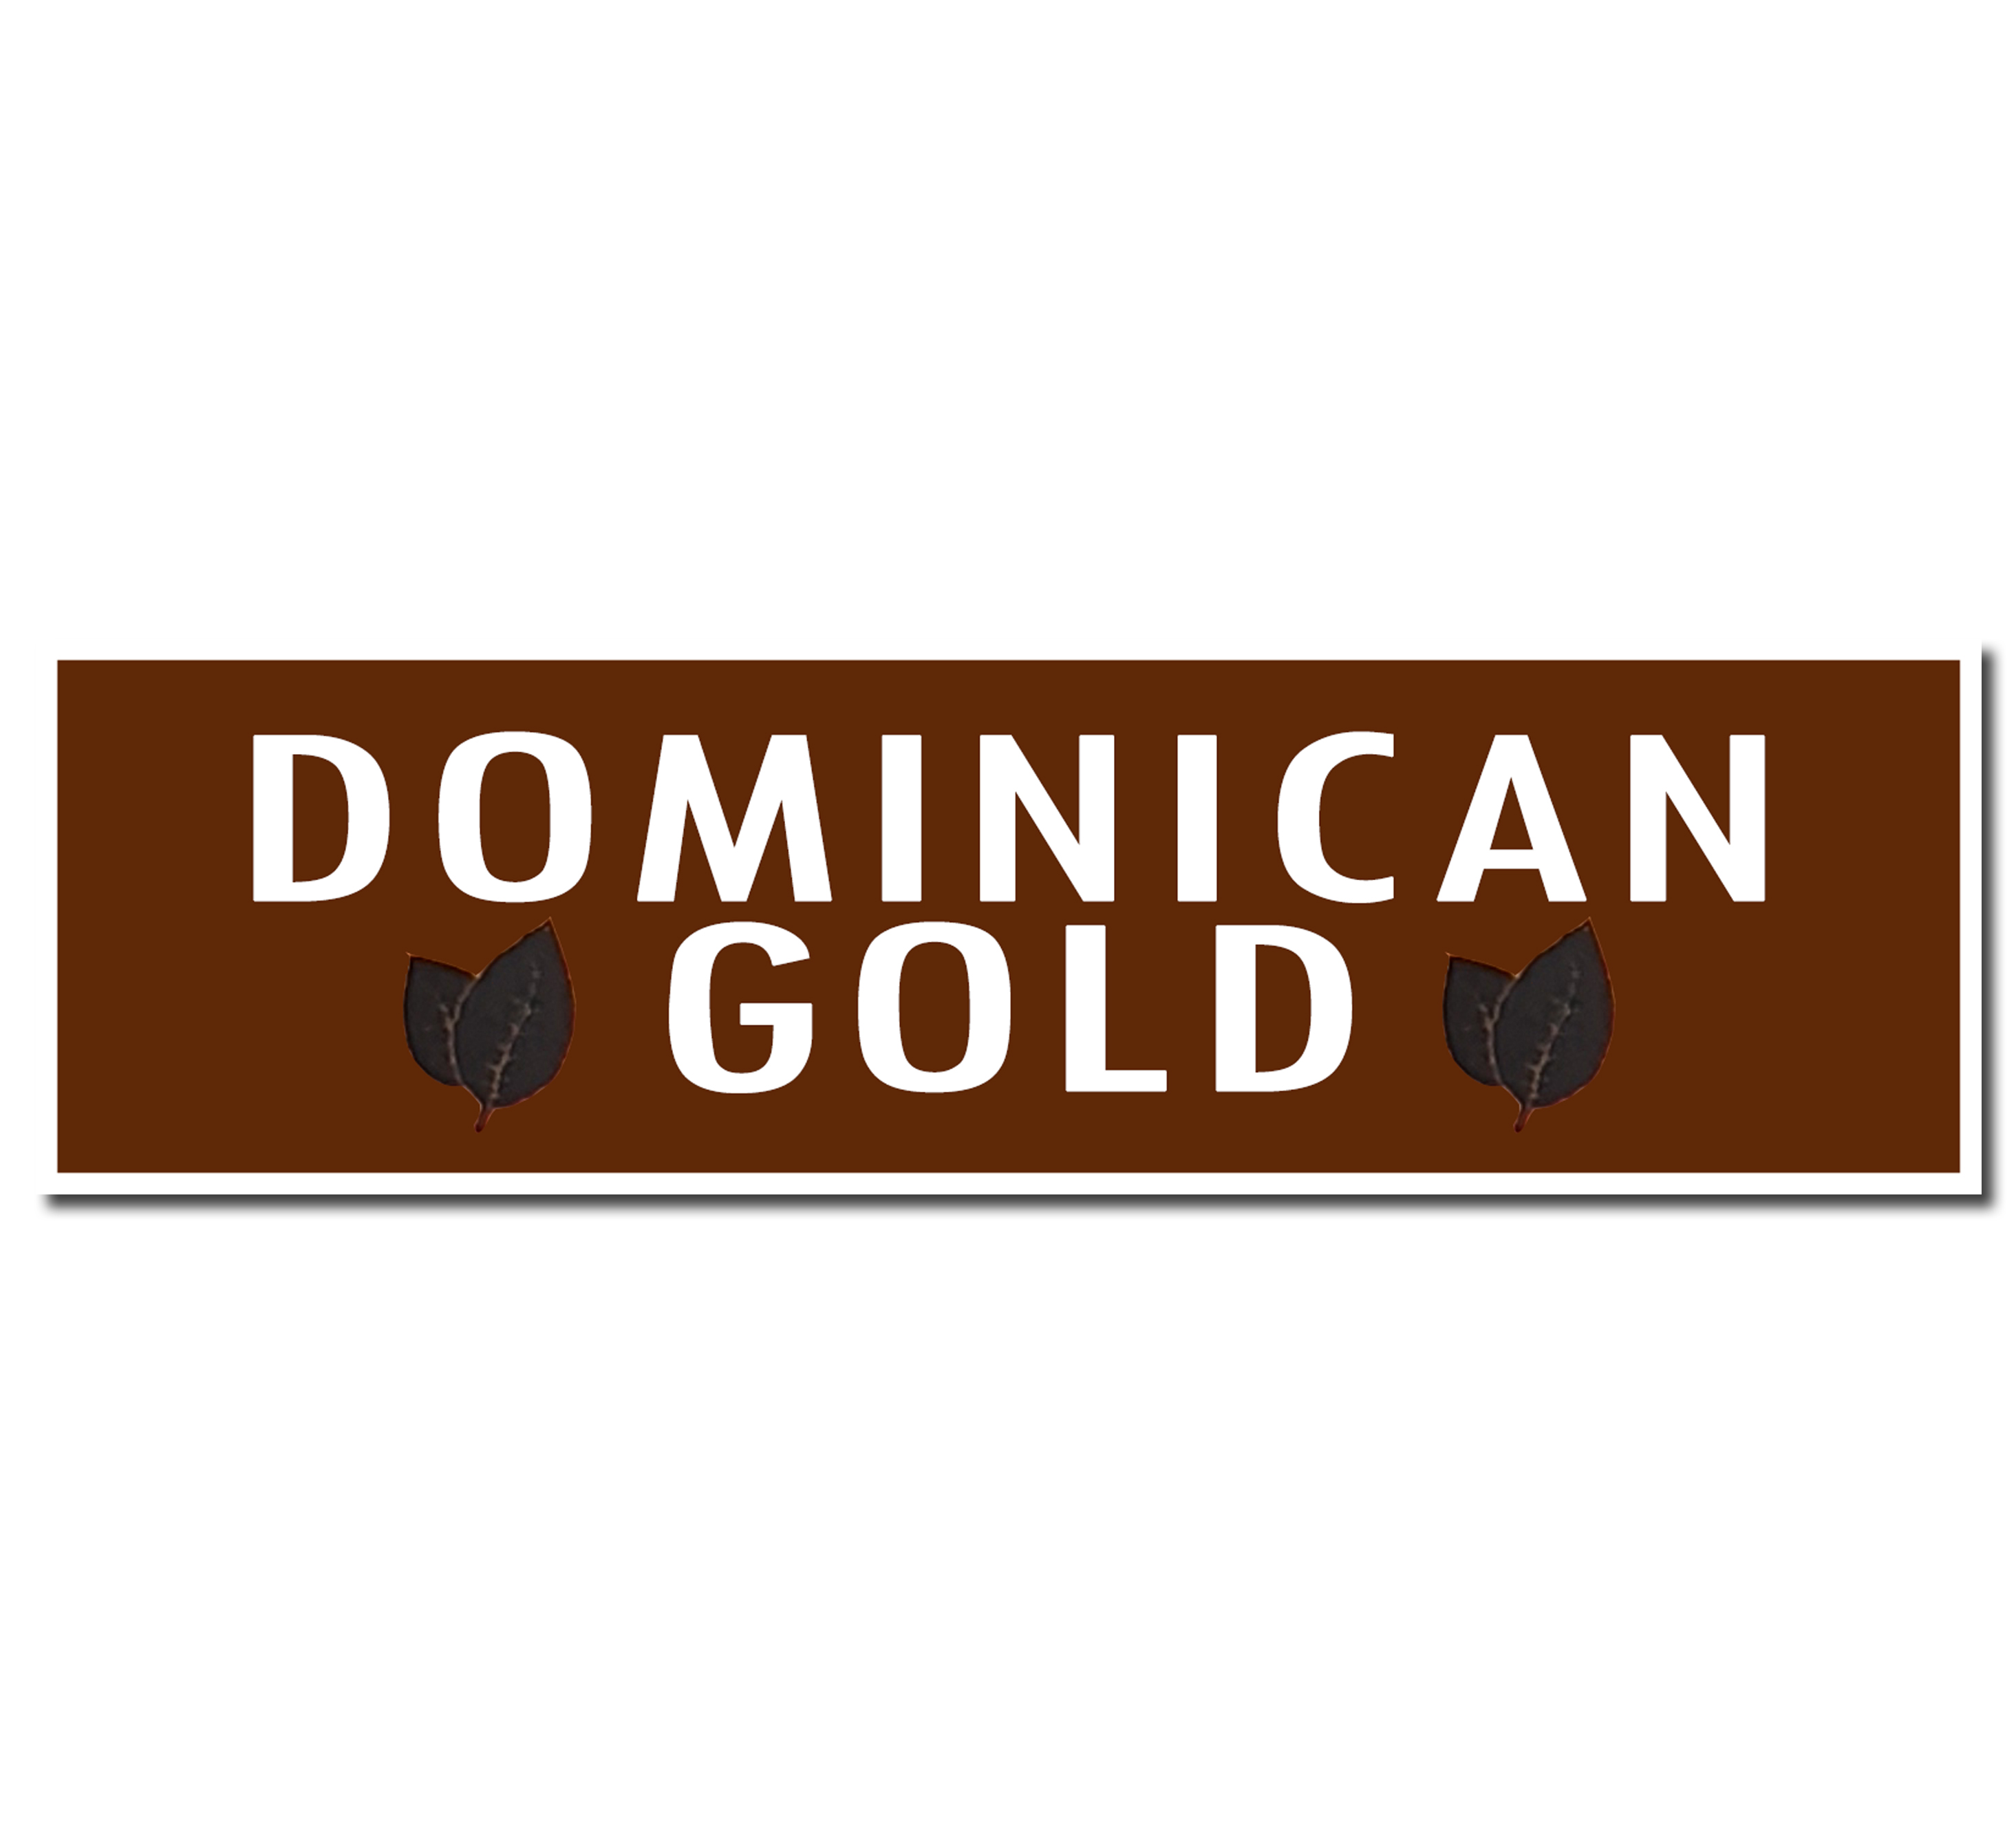 DOMINICAN GOLD (Rep. Dominicana)